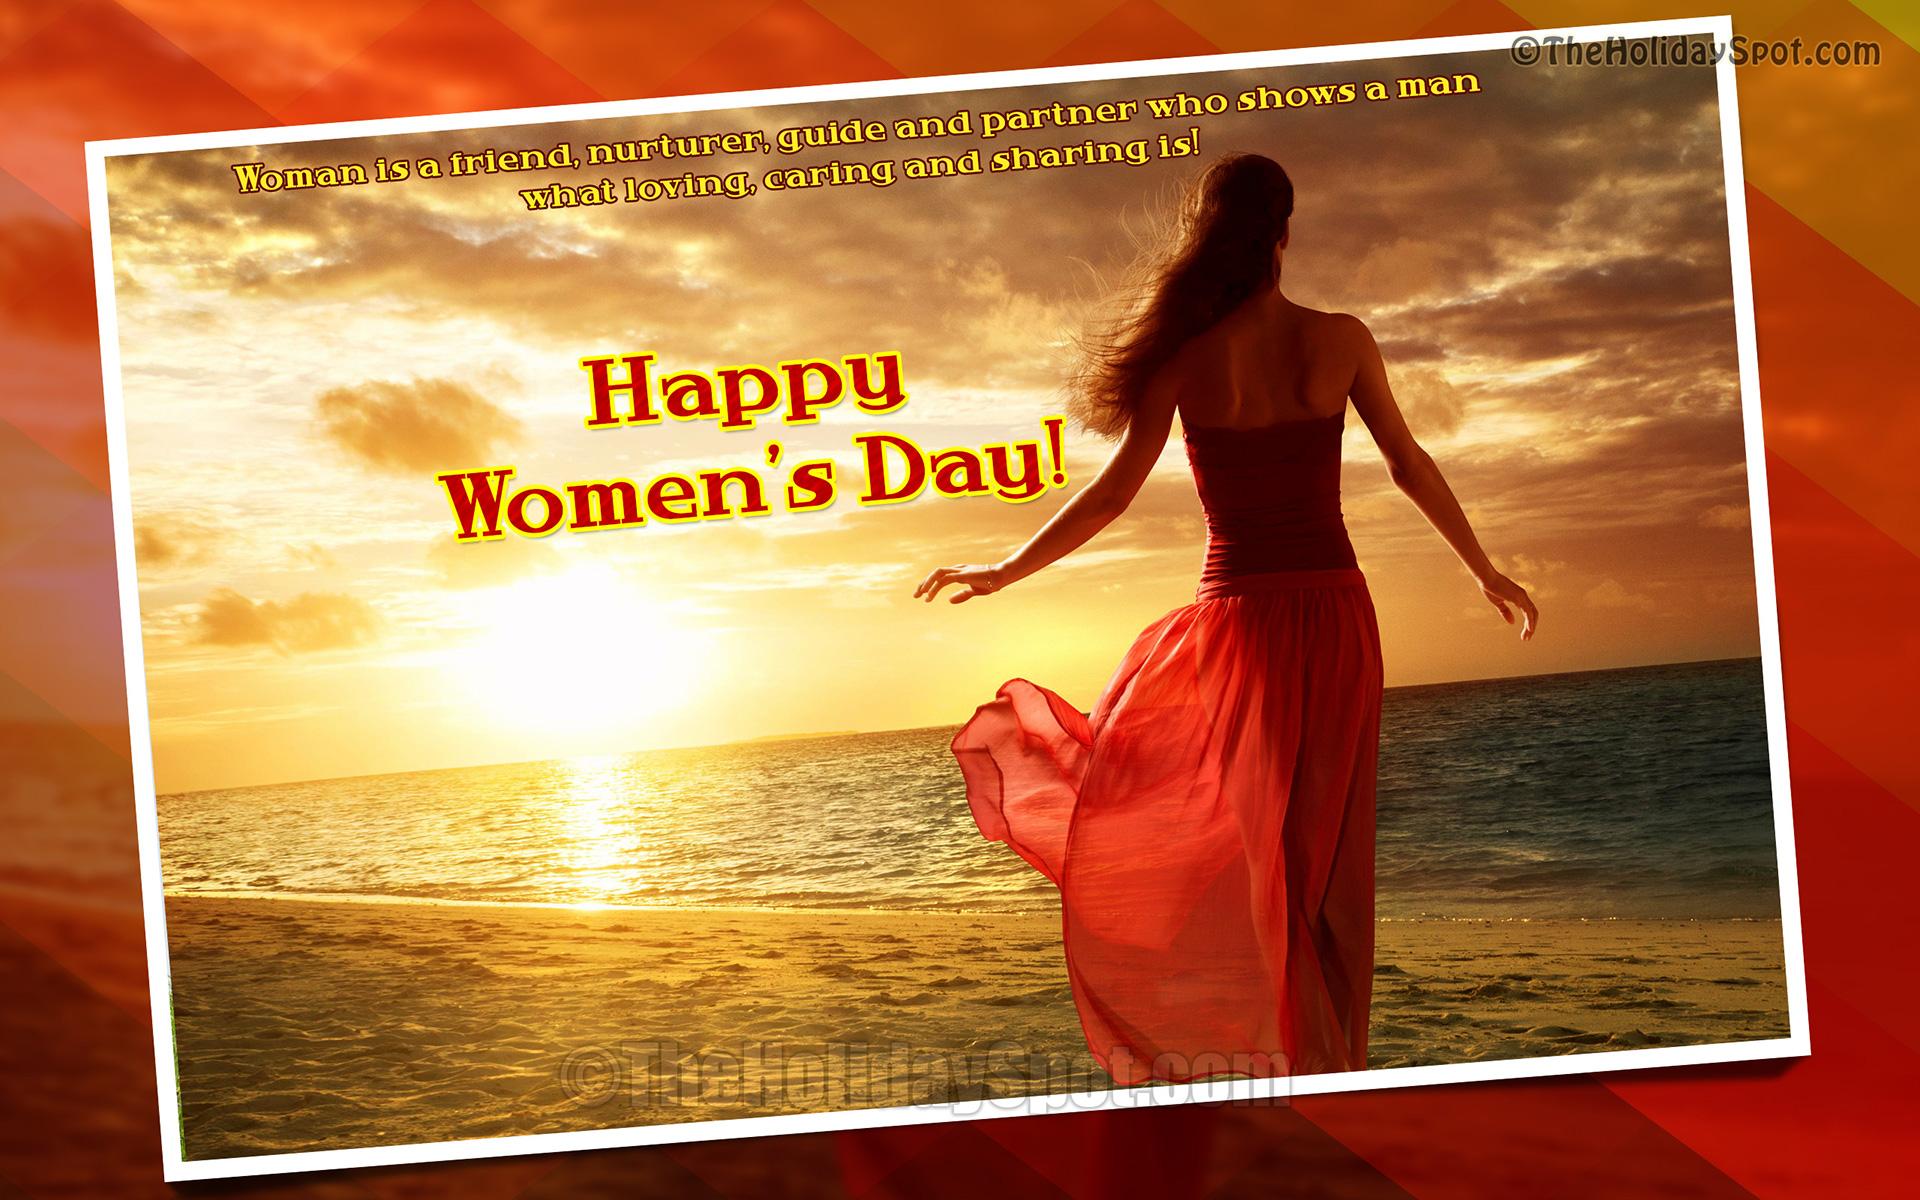 International Women's Day wallpaper from TheHolidaySpot